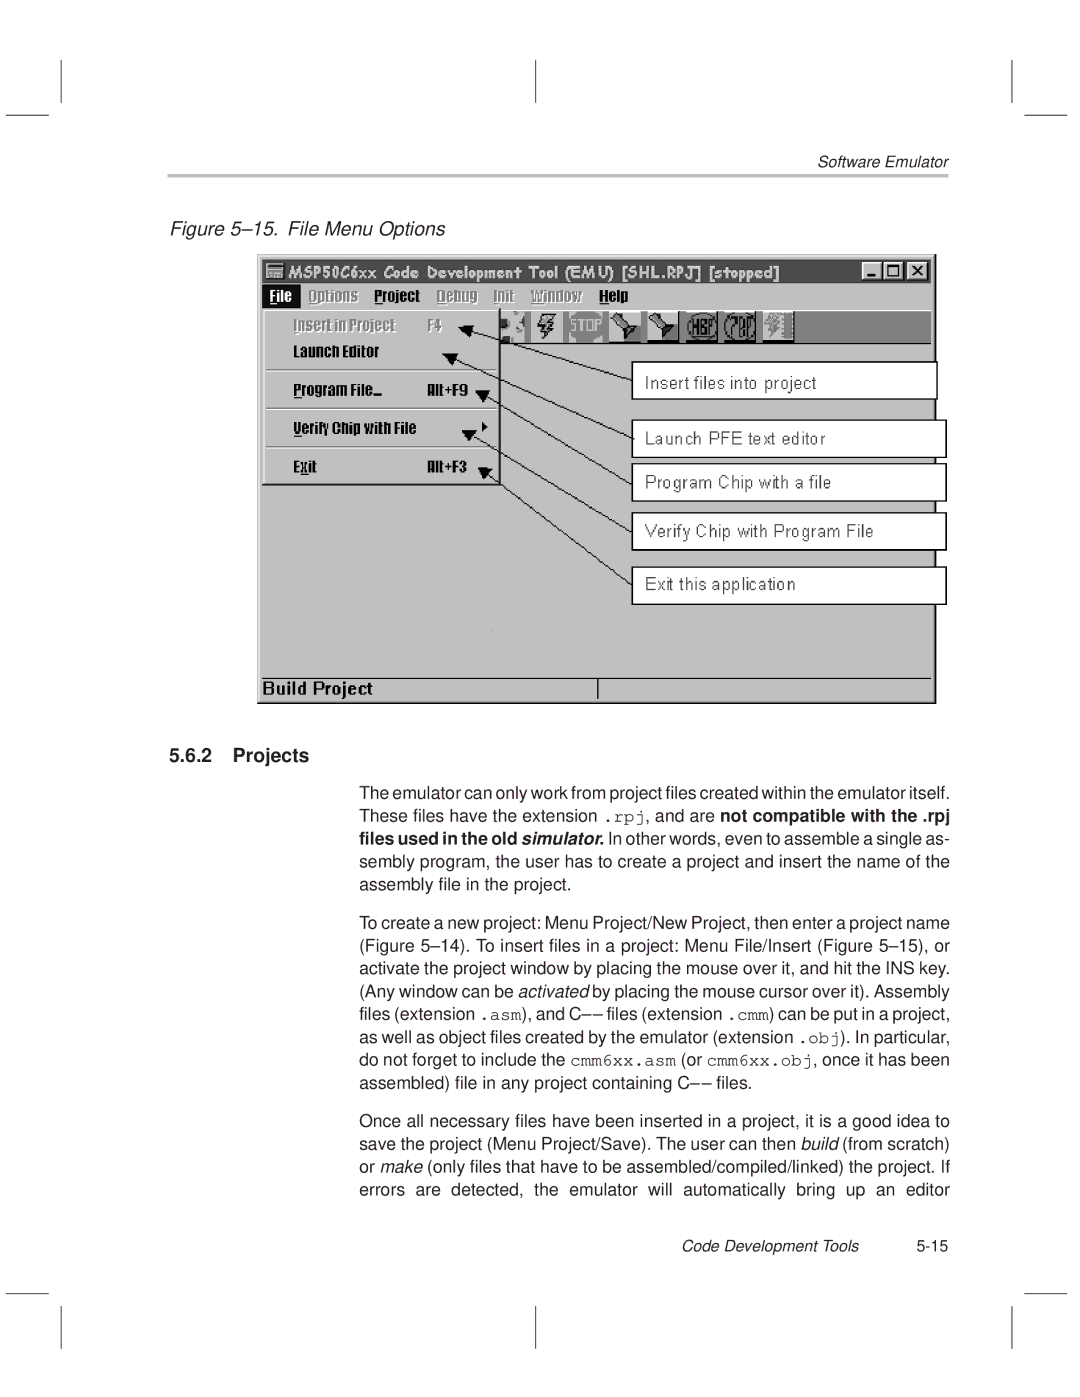 Texas Instruments MSP50C614 manual ±15. File Menu Options, Projects 